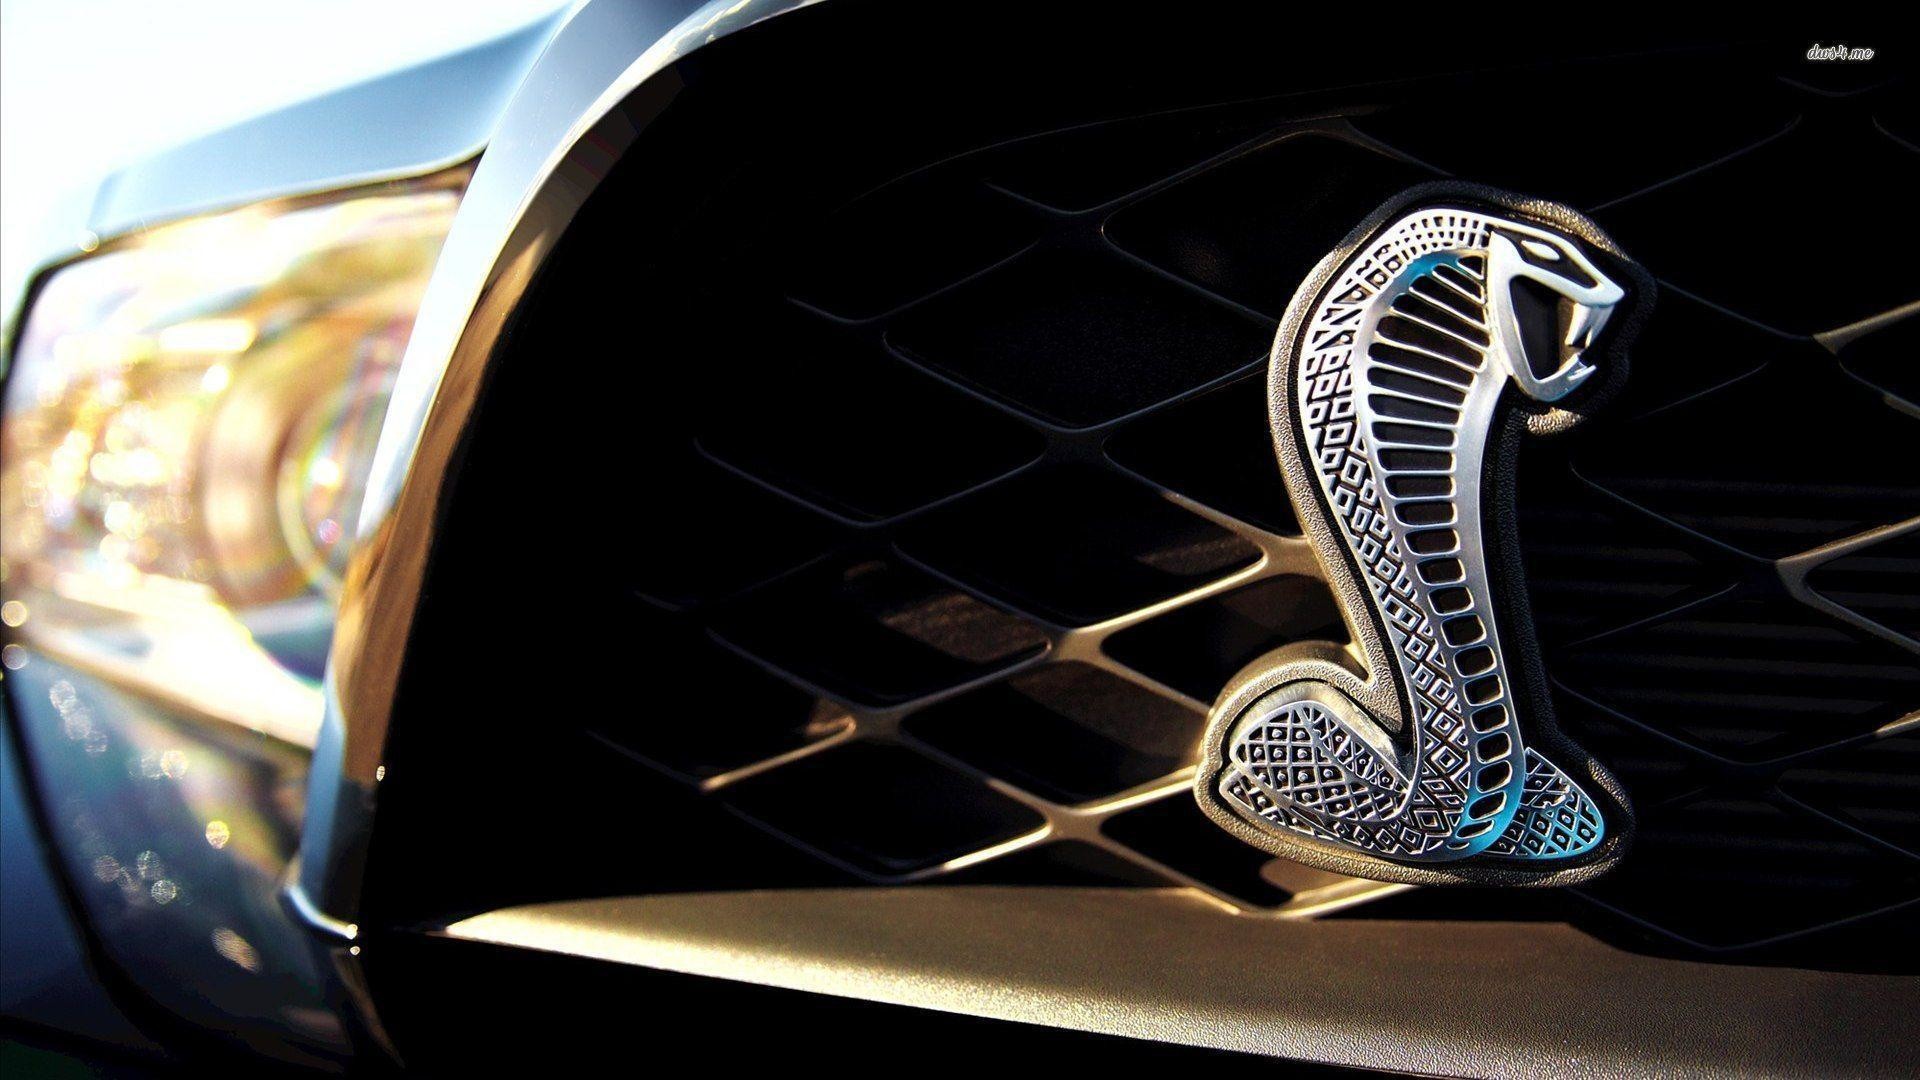 Shelby Mustang logo wallpaper – Car wallpapers – #